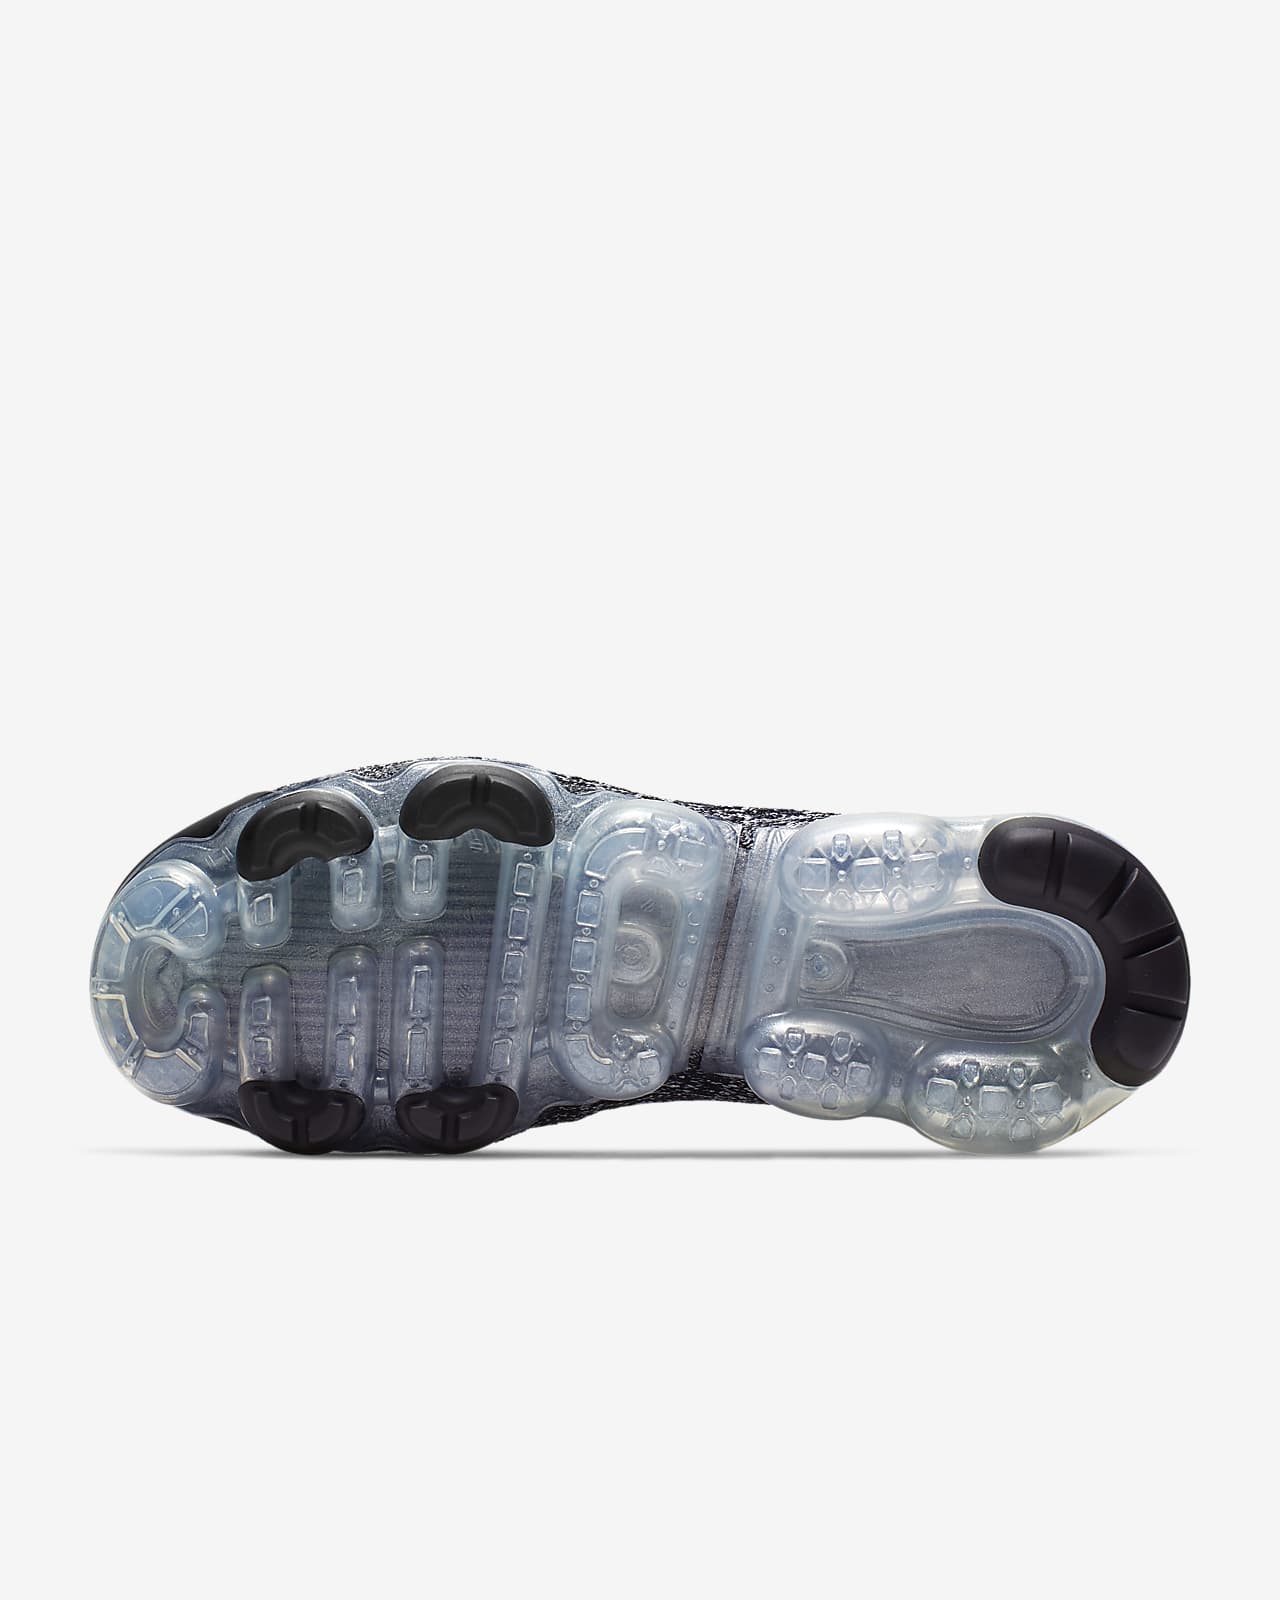 vapormax bottom of shoe